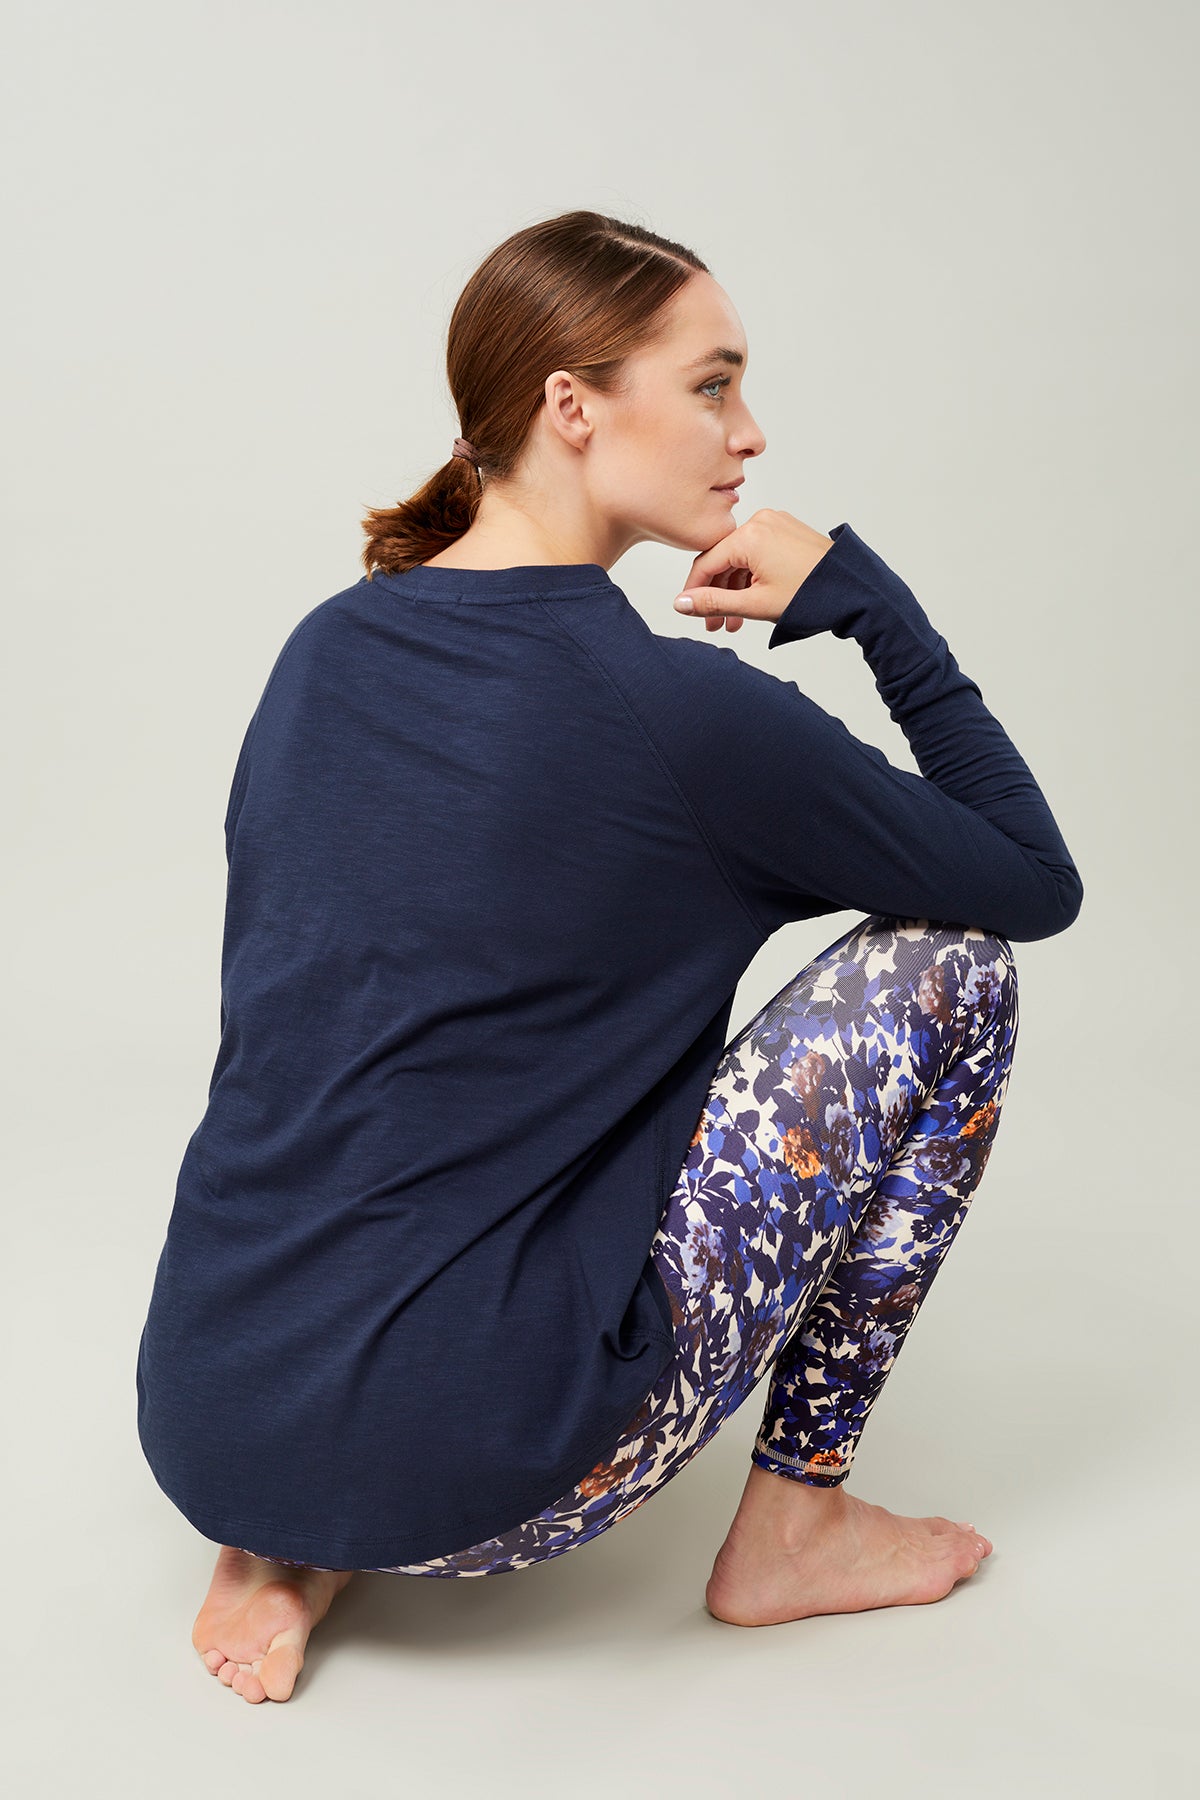 Mandala Yoga Shirt Blau Outfit Rückseite - Active Long Sleeve